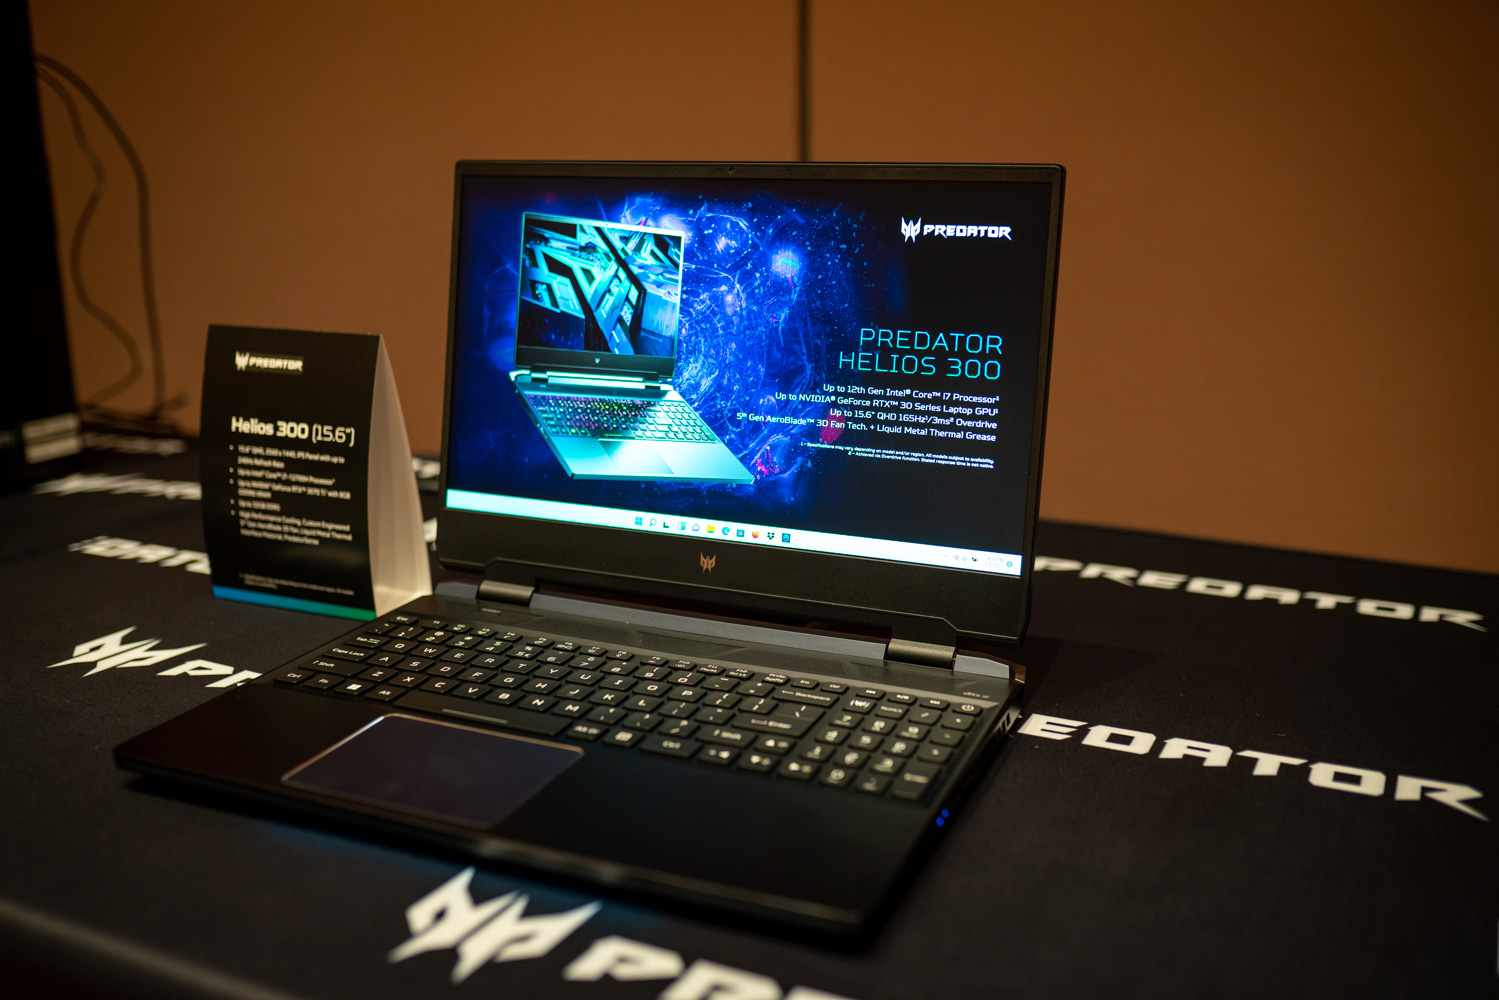 Acer Predator Helios 300 gaming laptop.